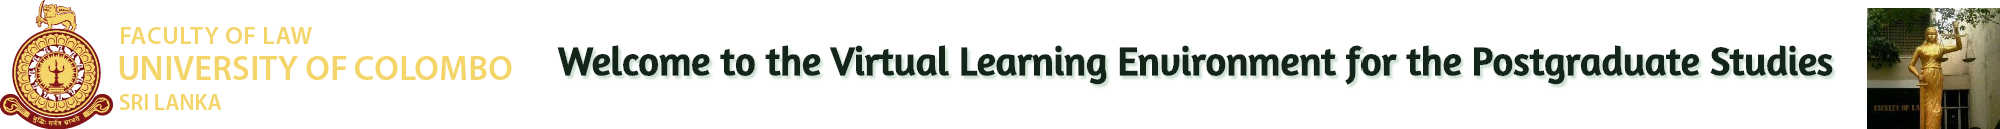 Virtual Learning Environment for the Postgraduate Studies